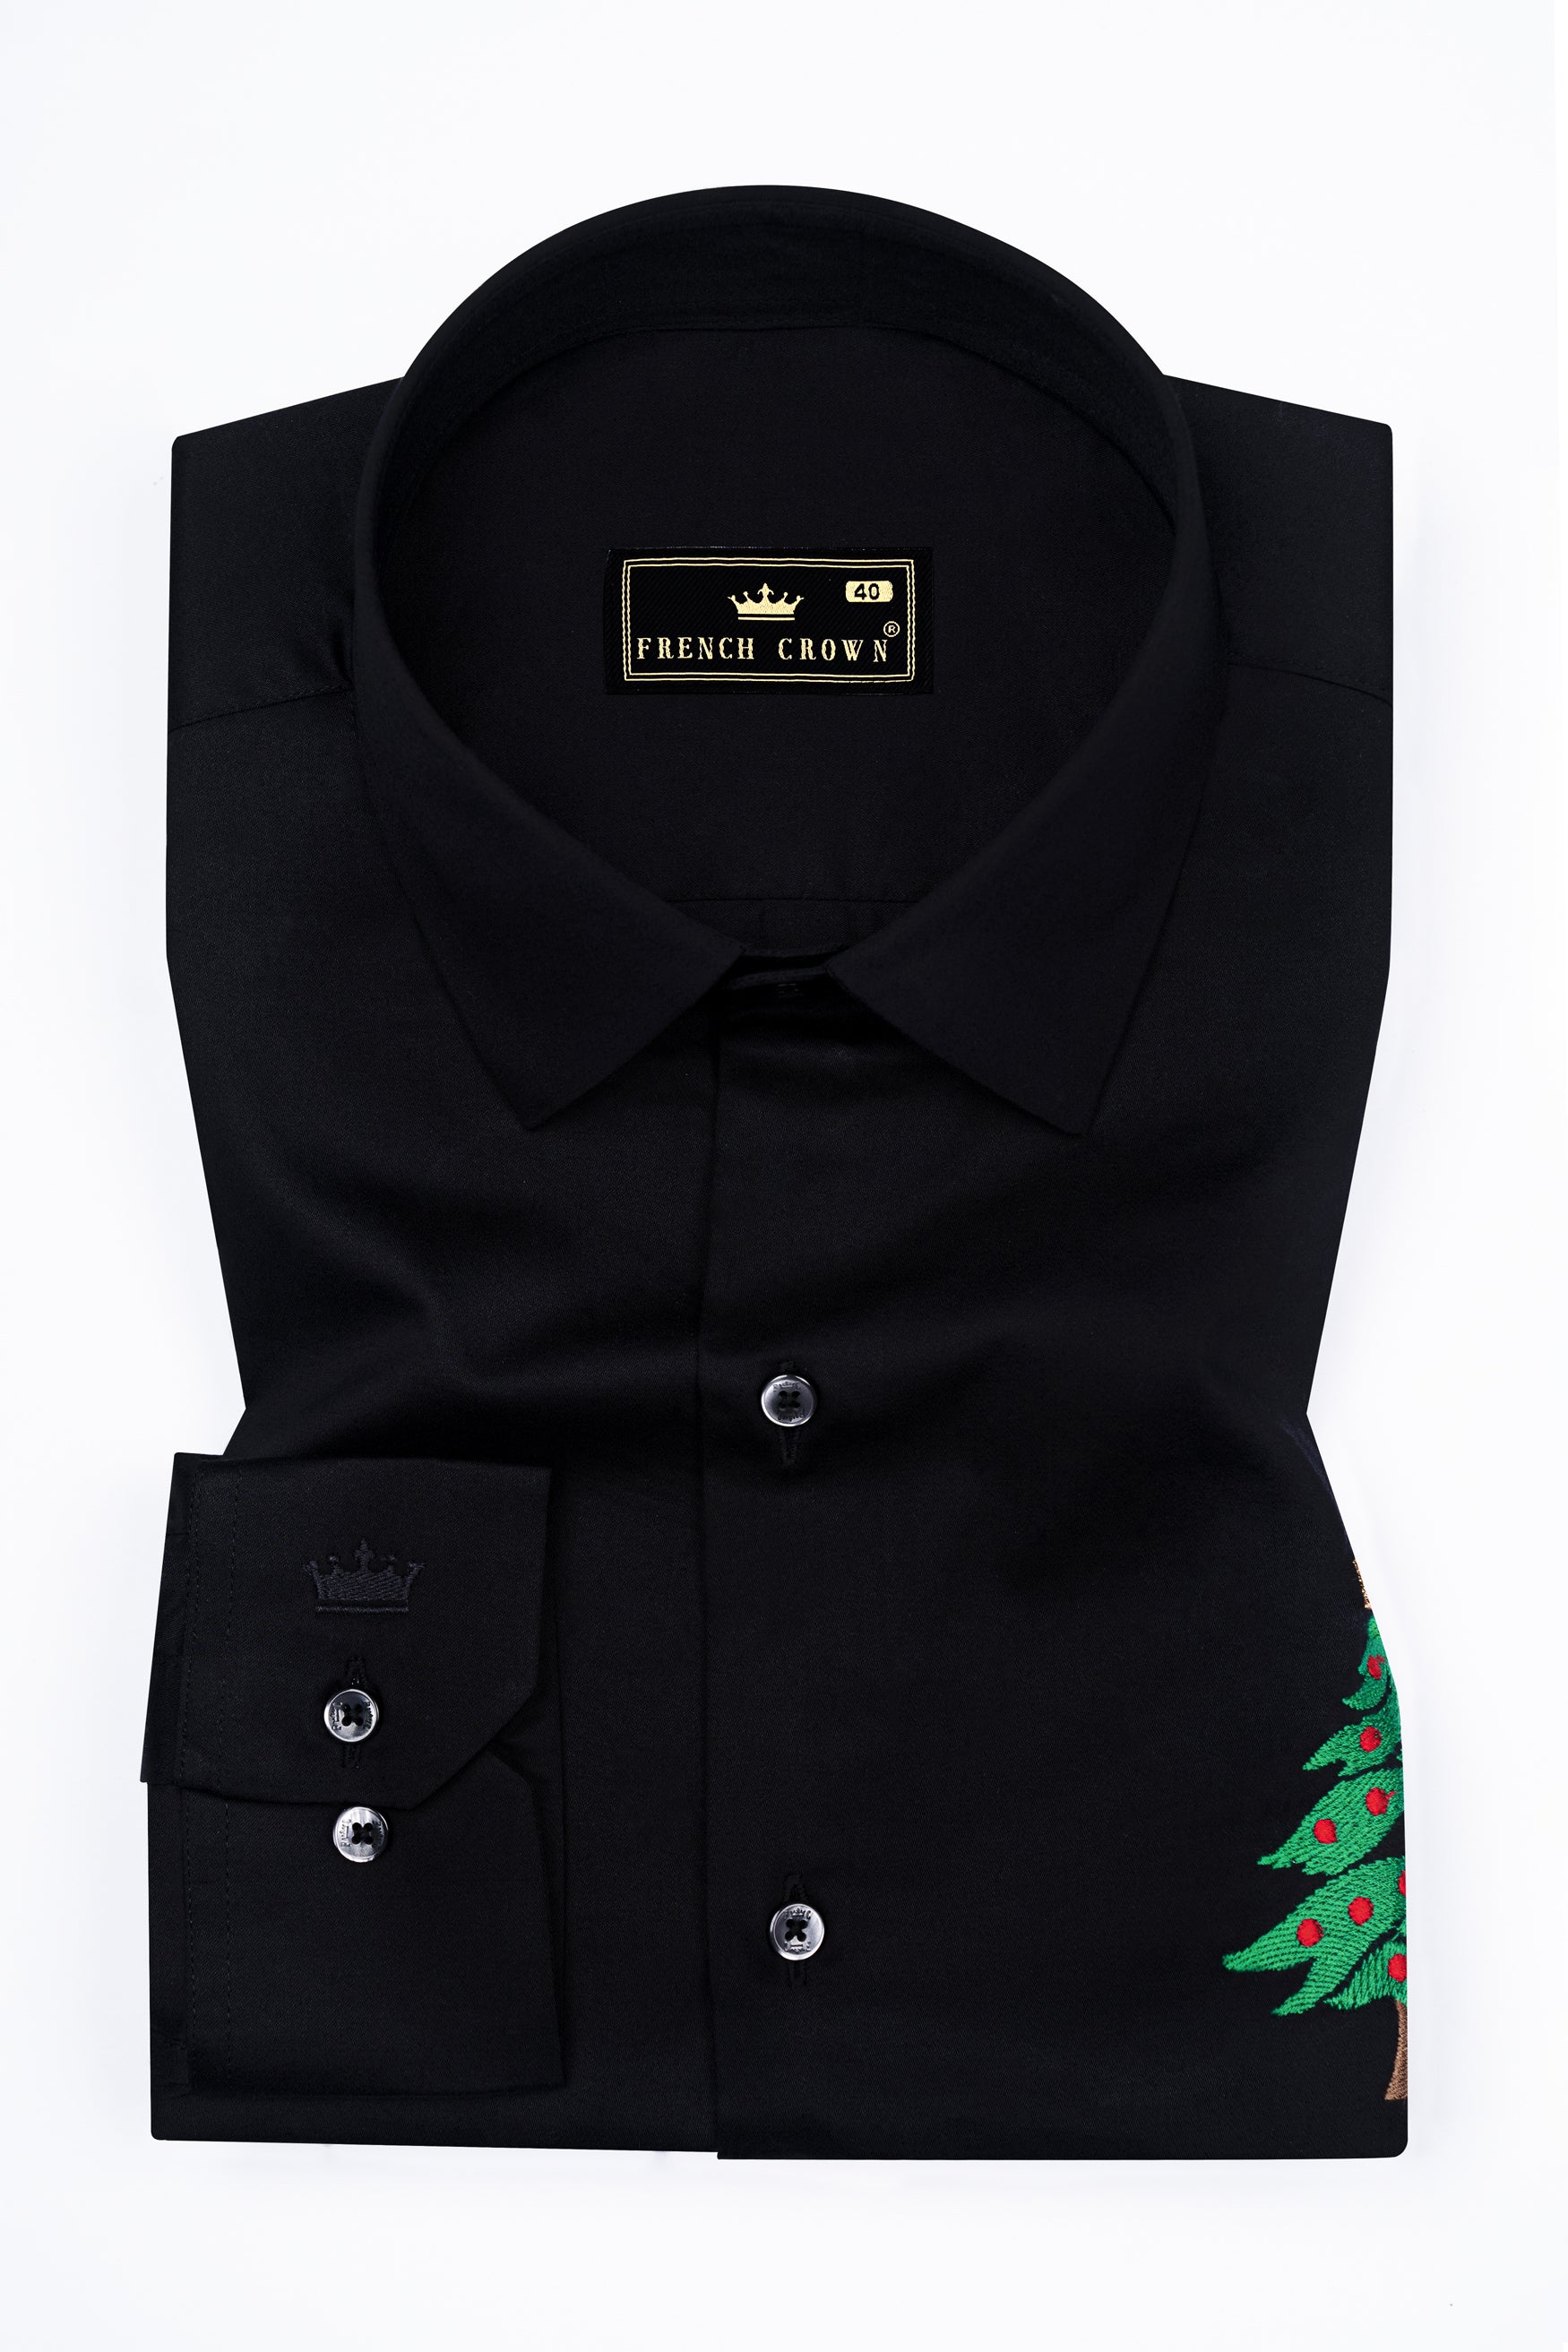 Jade Black Christmas Tree Embroidered Subtle Sheen Super Soft Premium Cotton Designer Shirt 12248-NP-BLK-E382-38, 12248-NP-BLK-E382-H-38, 12248-NP-BLK-E382-39, 12248-NP-BLK-E382-H-39, 12248-NP-BLK-E382-40, 12248-NP-BLK-E382-H-40, 12248-NP-BLK-E382-42, 12248-NP-BLK-E382-H-42, 12248-NP-BLK-E382-44, 12248-NP-BLK-E382-H-44, 12248-NP-BLK-E382-46, 12248-NP-BLK-E382-H-46, 12248-NP-BLK-E382-48, 12248-NP-BLK-E382-H-48, 12248-NP-BLK-E382-50, 12248-NP-BLK-E382-H-50, 12248-NP-BLK-E382-52, 12248-NP-BLK-E382-H-52